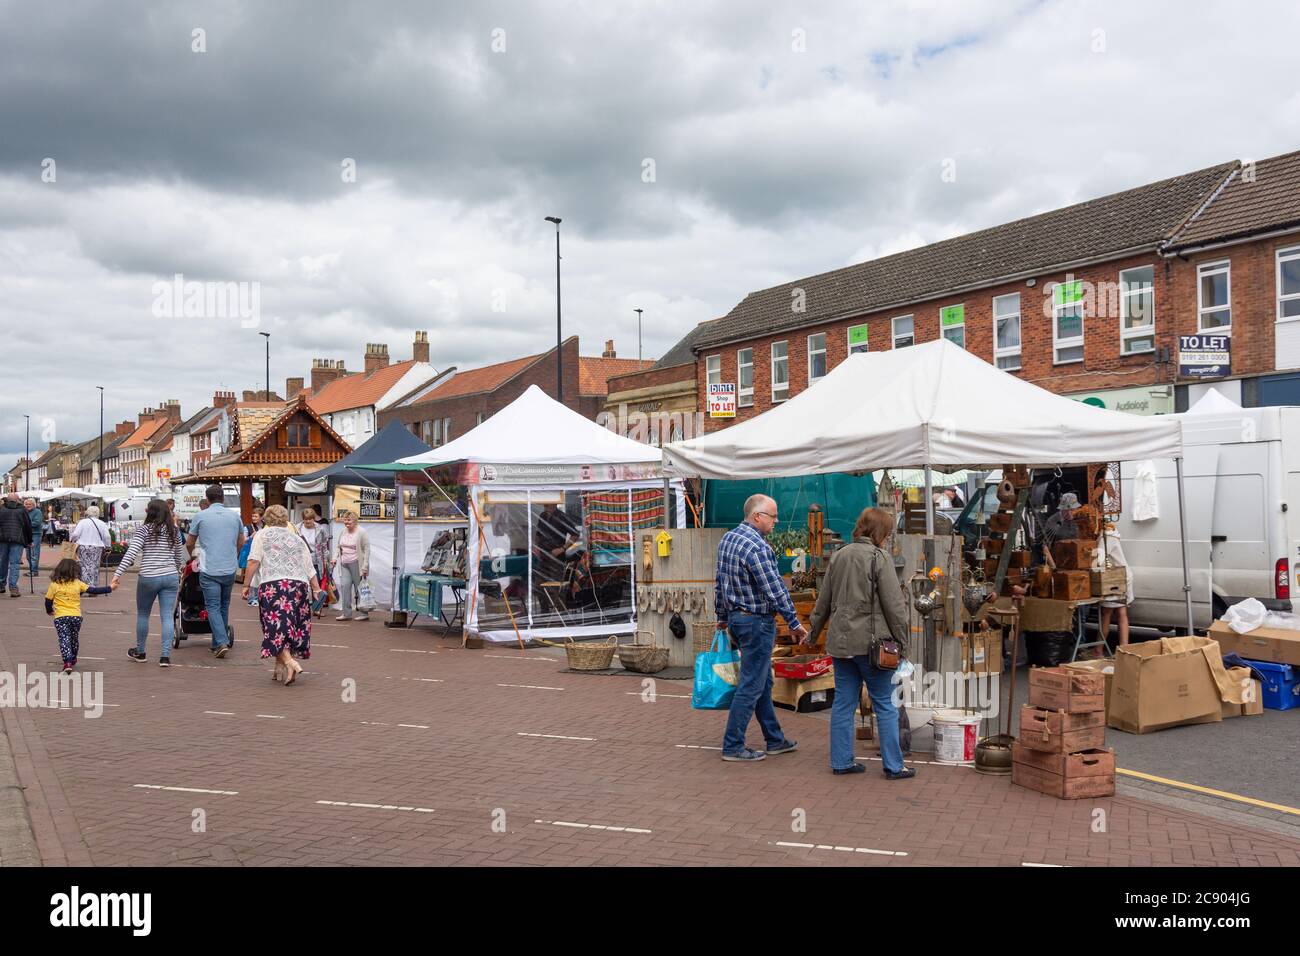 Market day, Northallerton High Street, Northallerton, North Yorkshire, England, United Kingdom Stock Photo